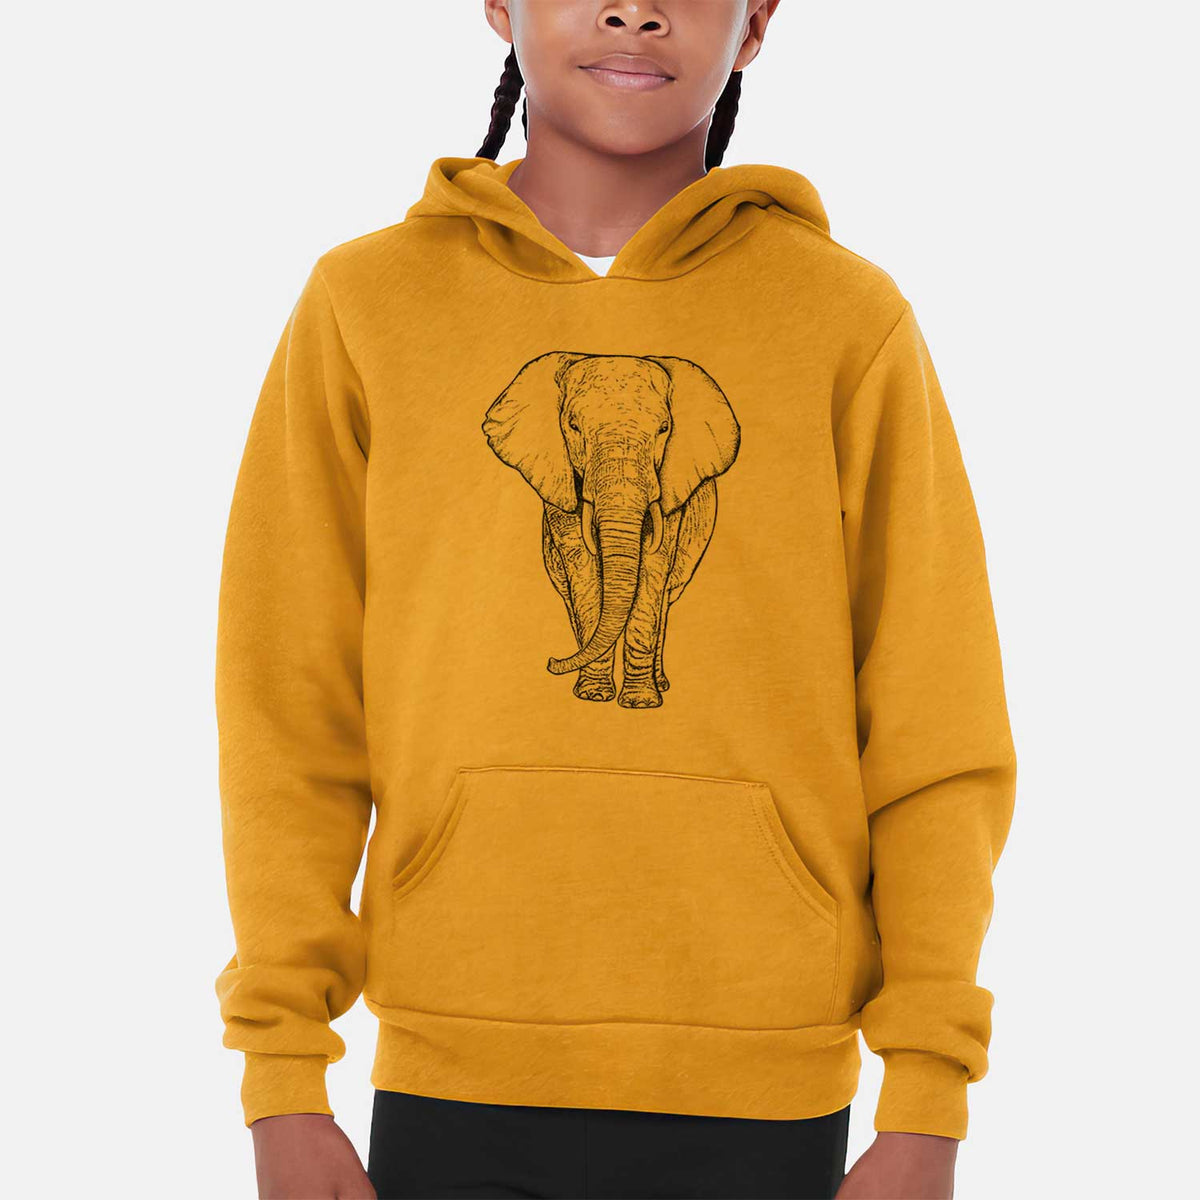 Loxodonta africana - African Elephant - Youth Hoodie Sweatshirt